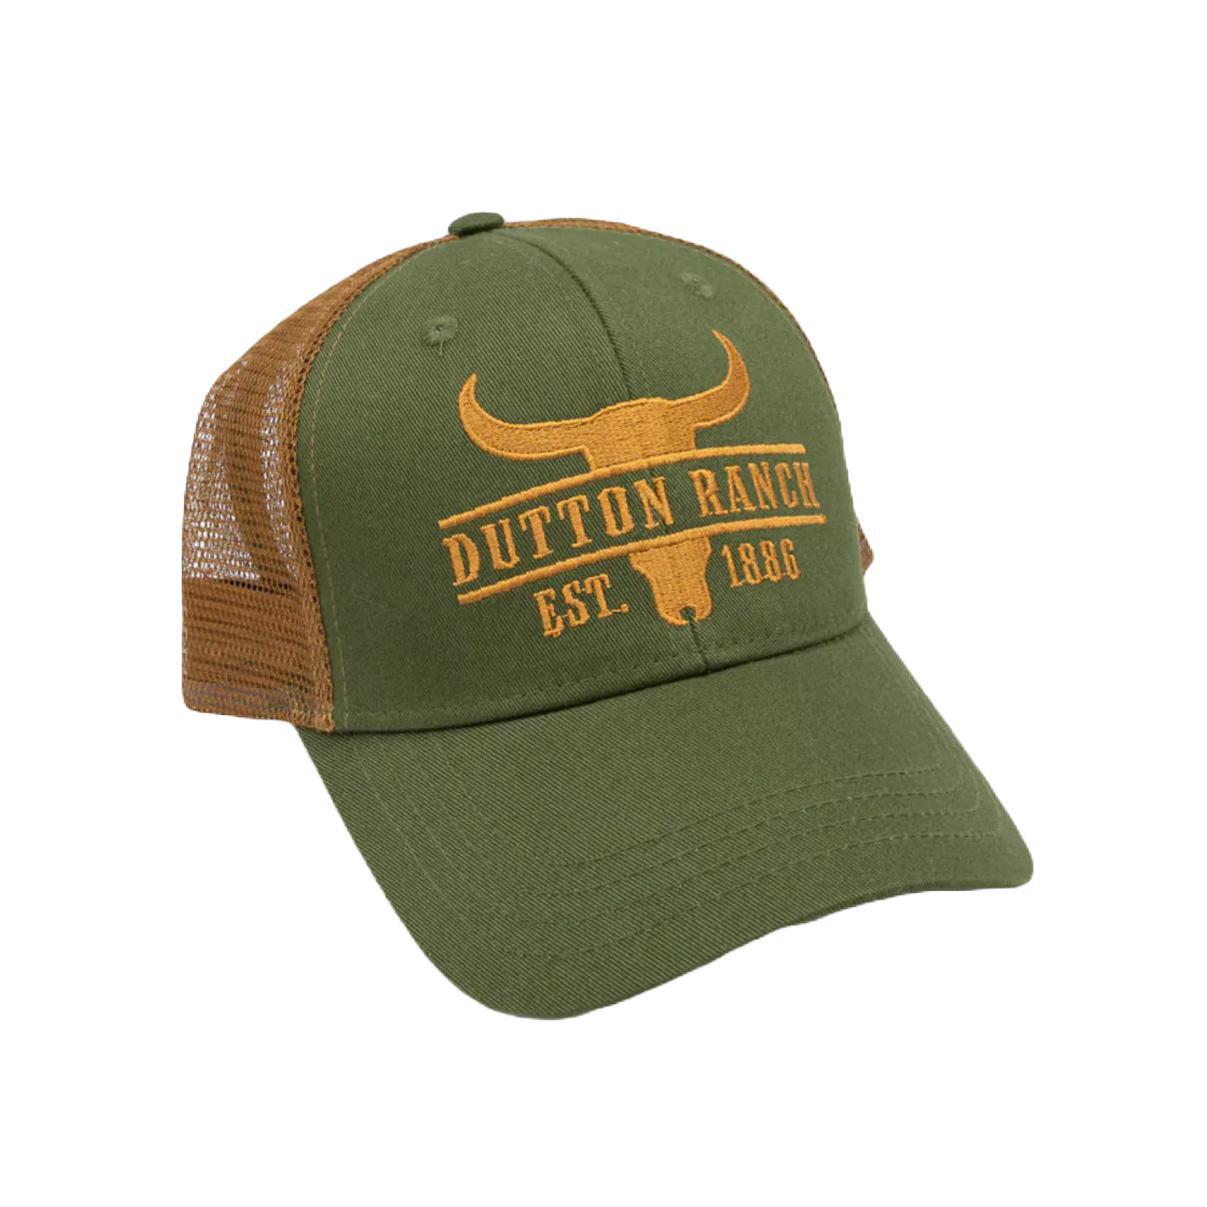 Changes Yellowstone Men's Dutton Ranch Steerhead Green/Gold Trucker Hat 66-656-193